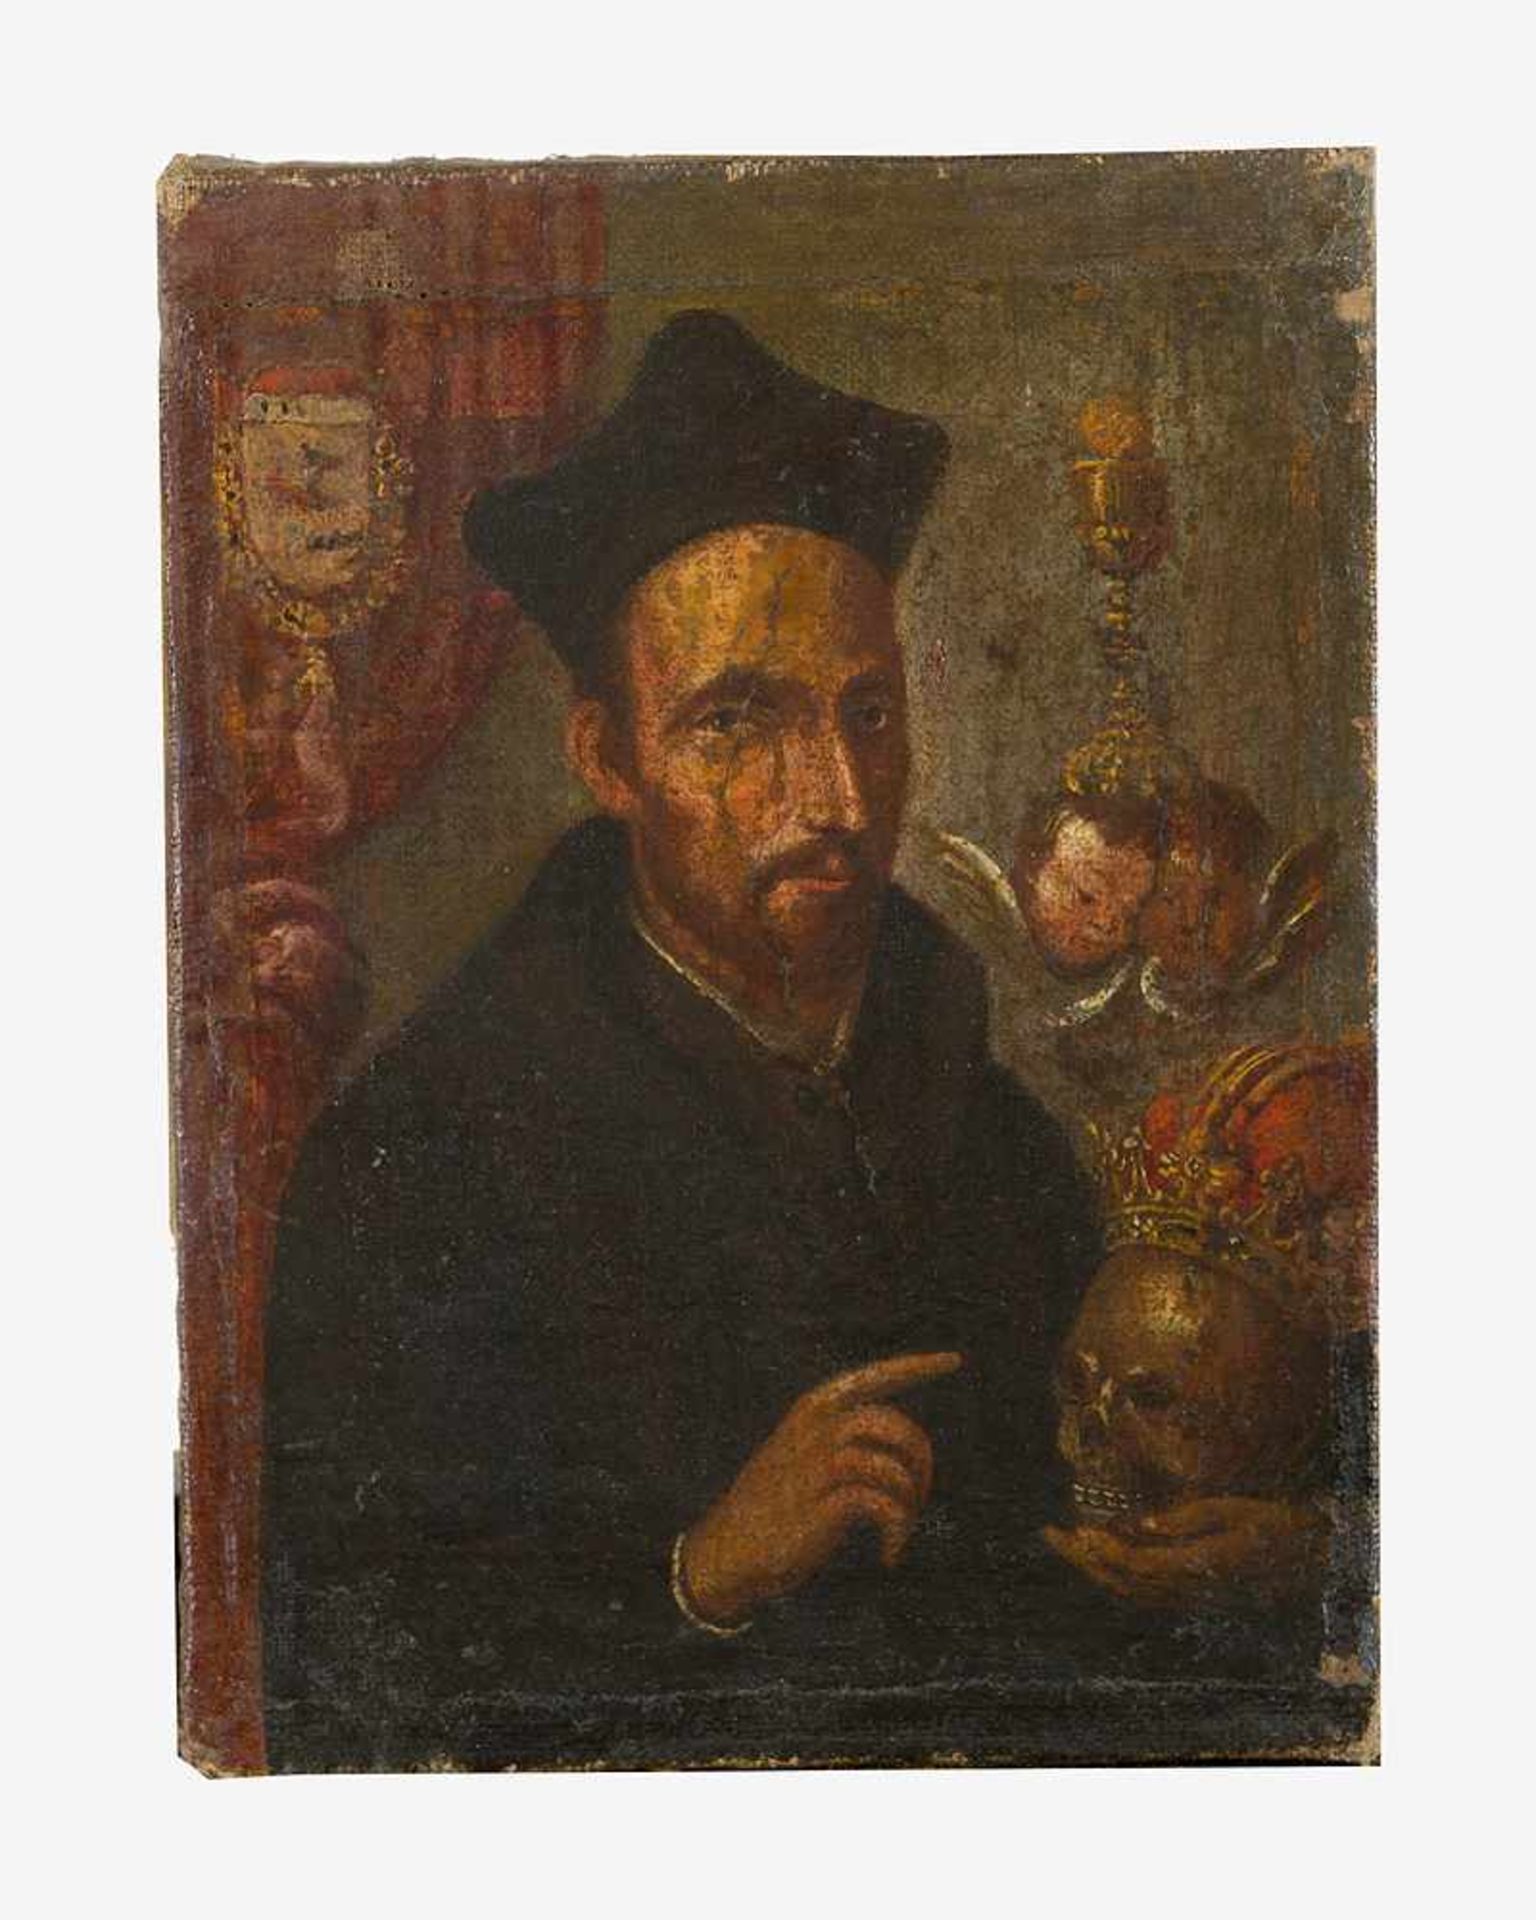 North Italian artist 17th Century